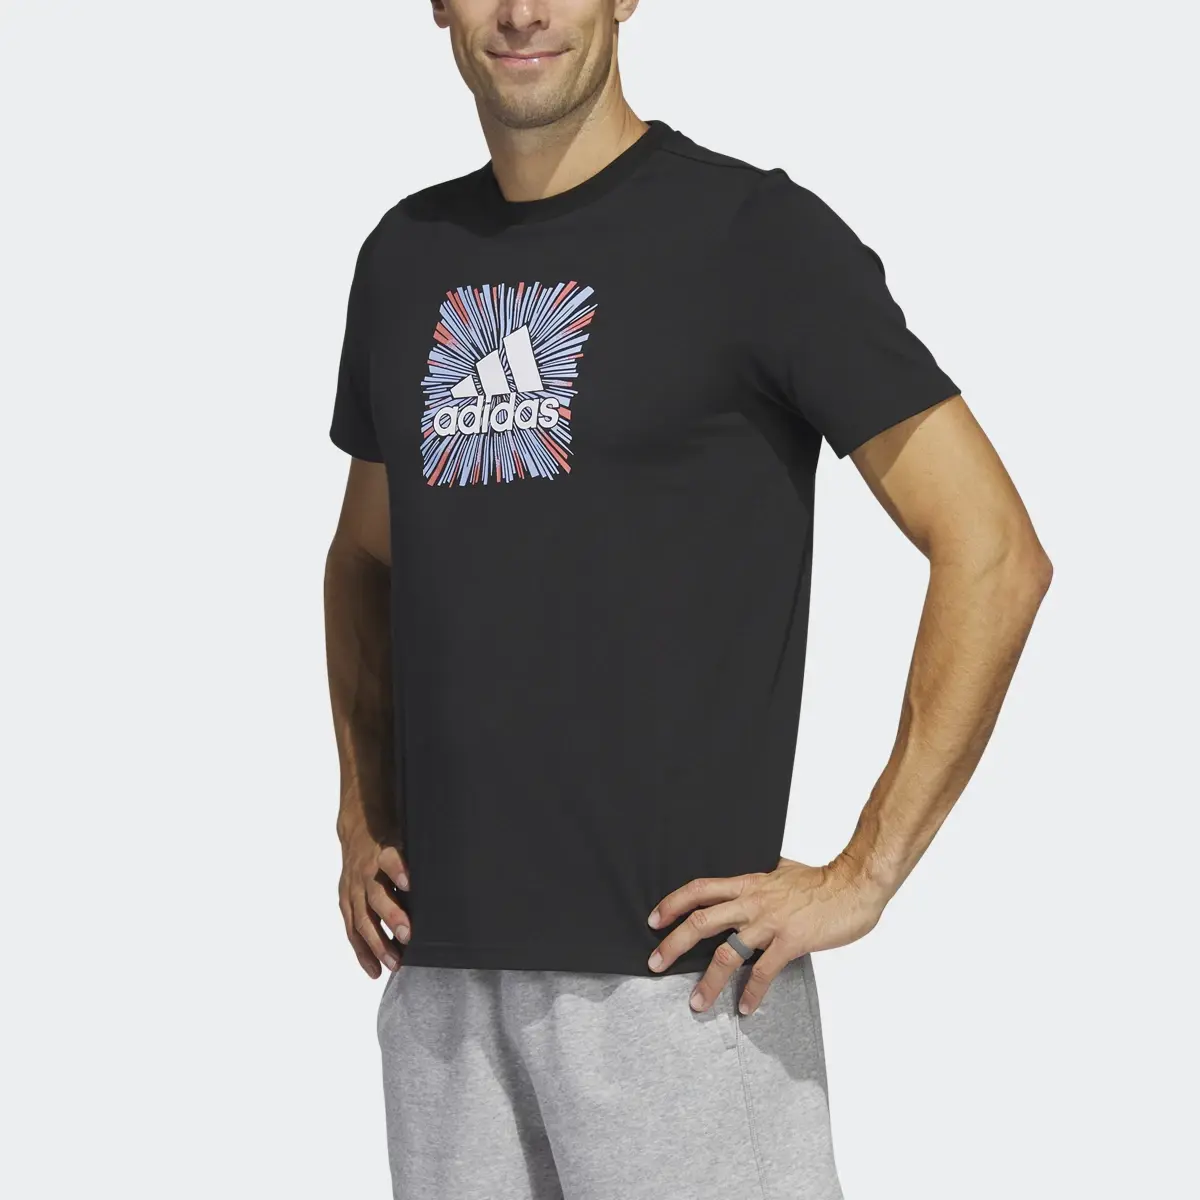 Adidas Sport Optimist Sun Logo Sportswear Graphic T-Shirt (Short Sleeve). 1